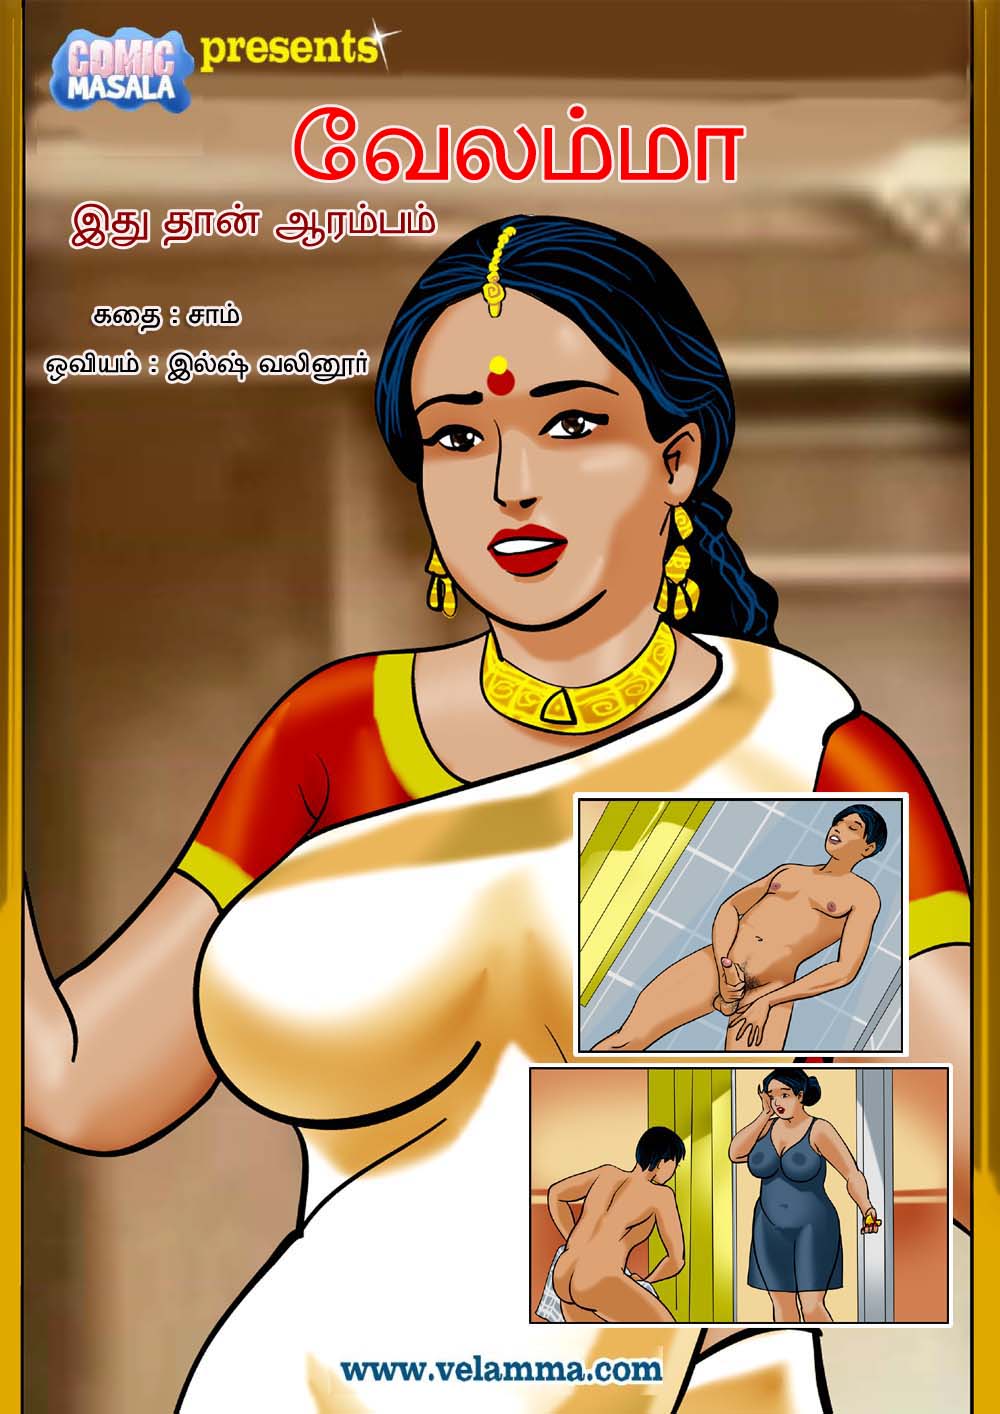 Tamil Sex Stories Mp3 - Most Viewed Tamil Sex Stories - TAMILSCANDALS